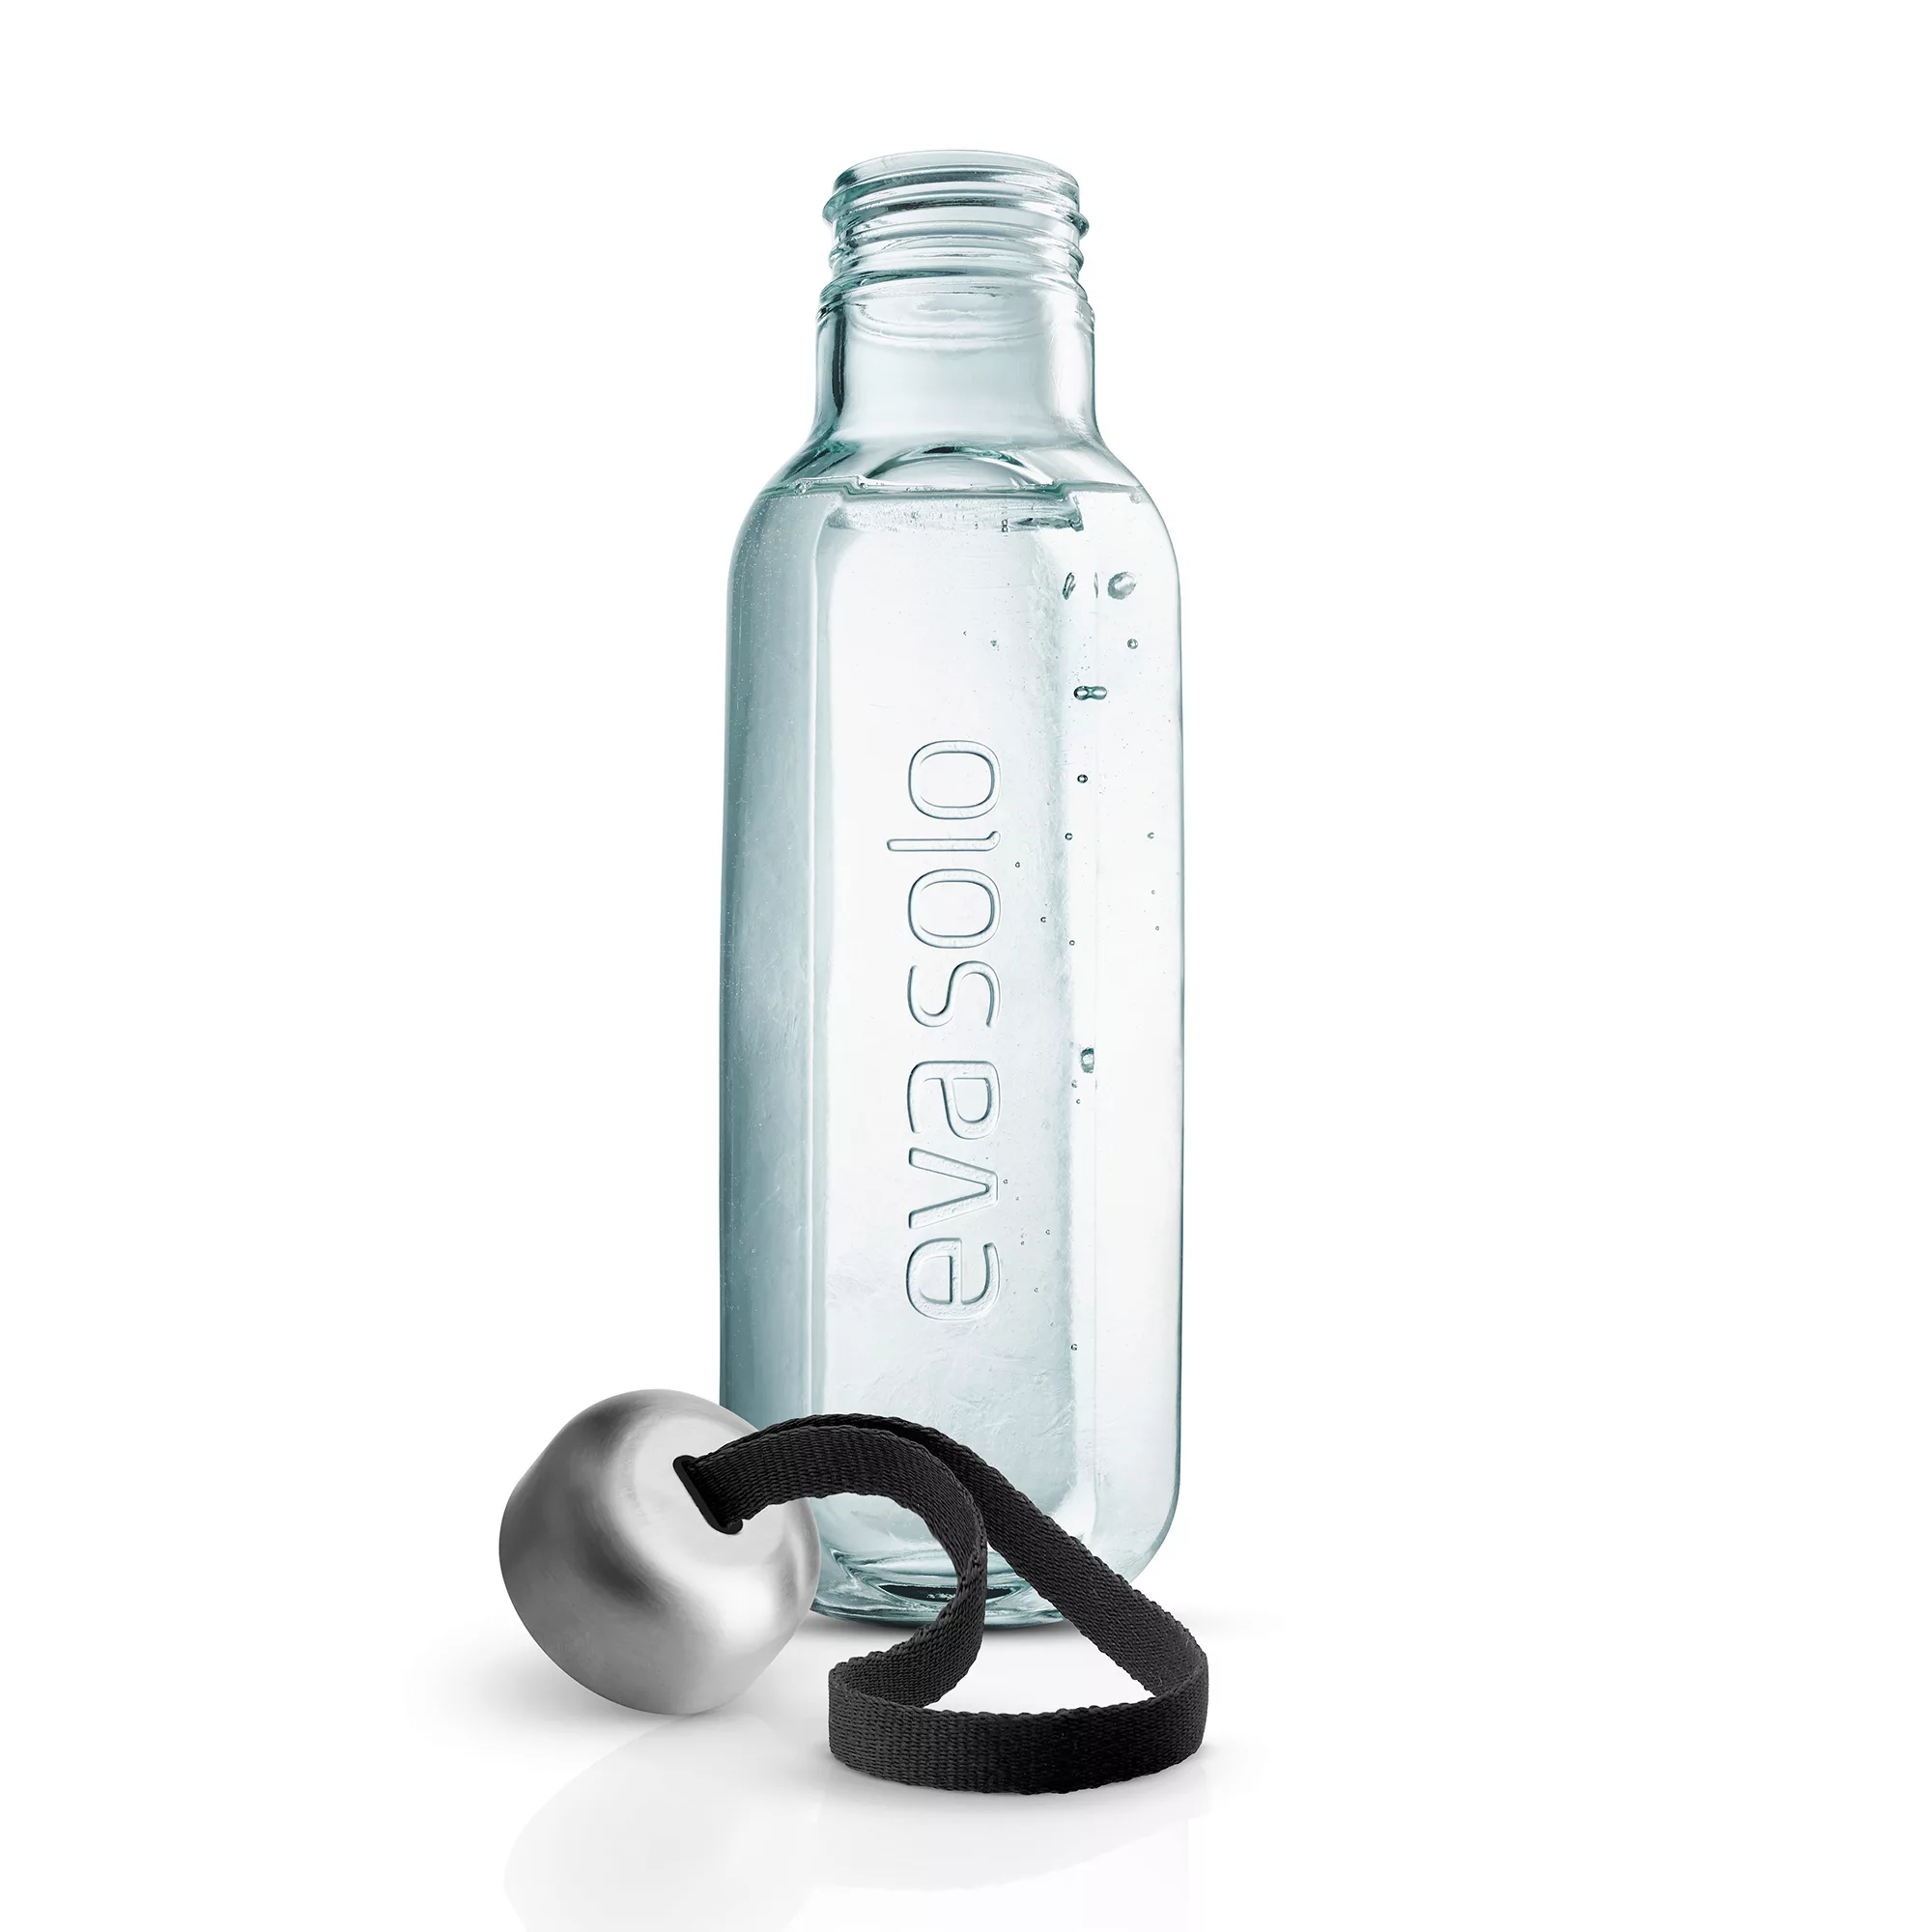 Trinkflasche Recycled glas transparent / 0,5 L - Recycling-Glas - Eva Solo günstig online kaufen